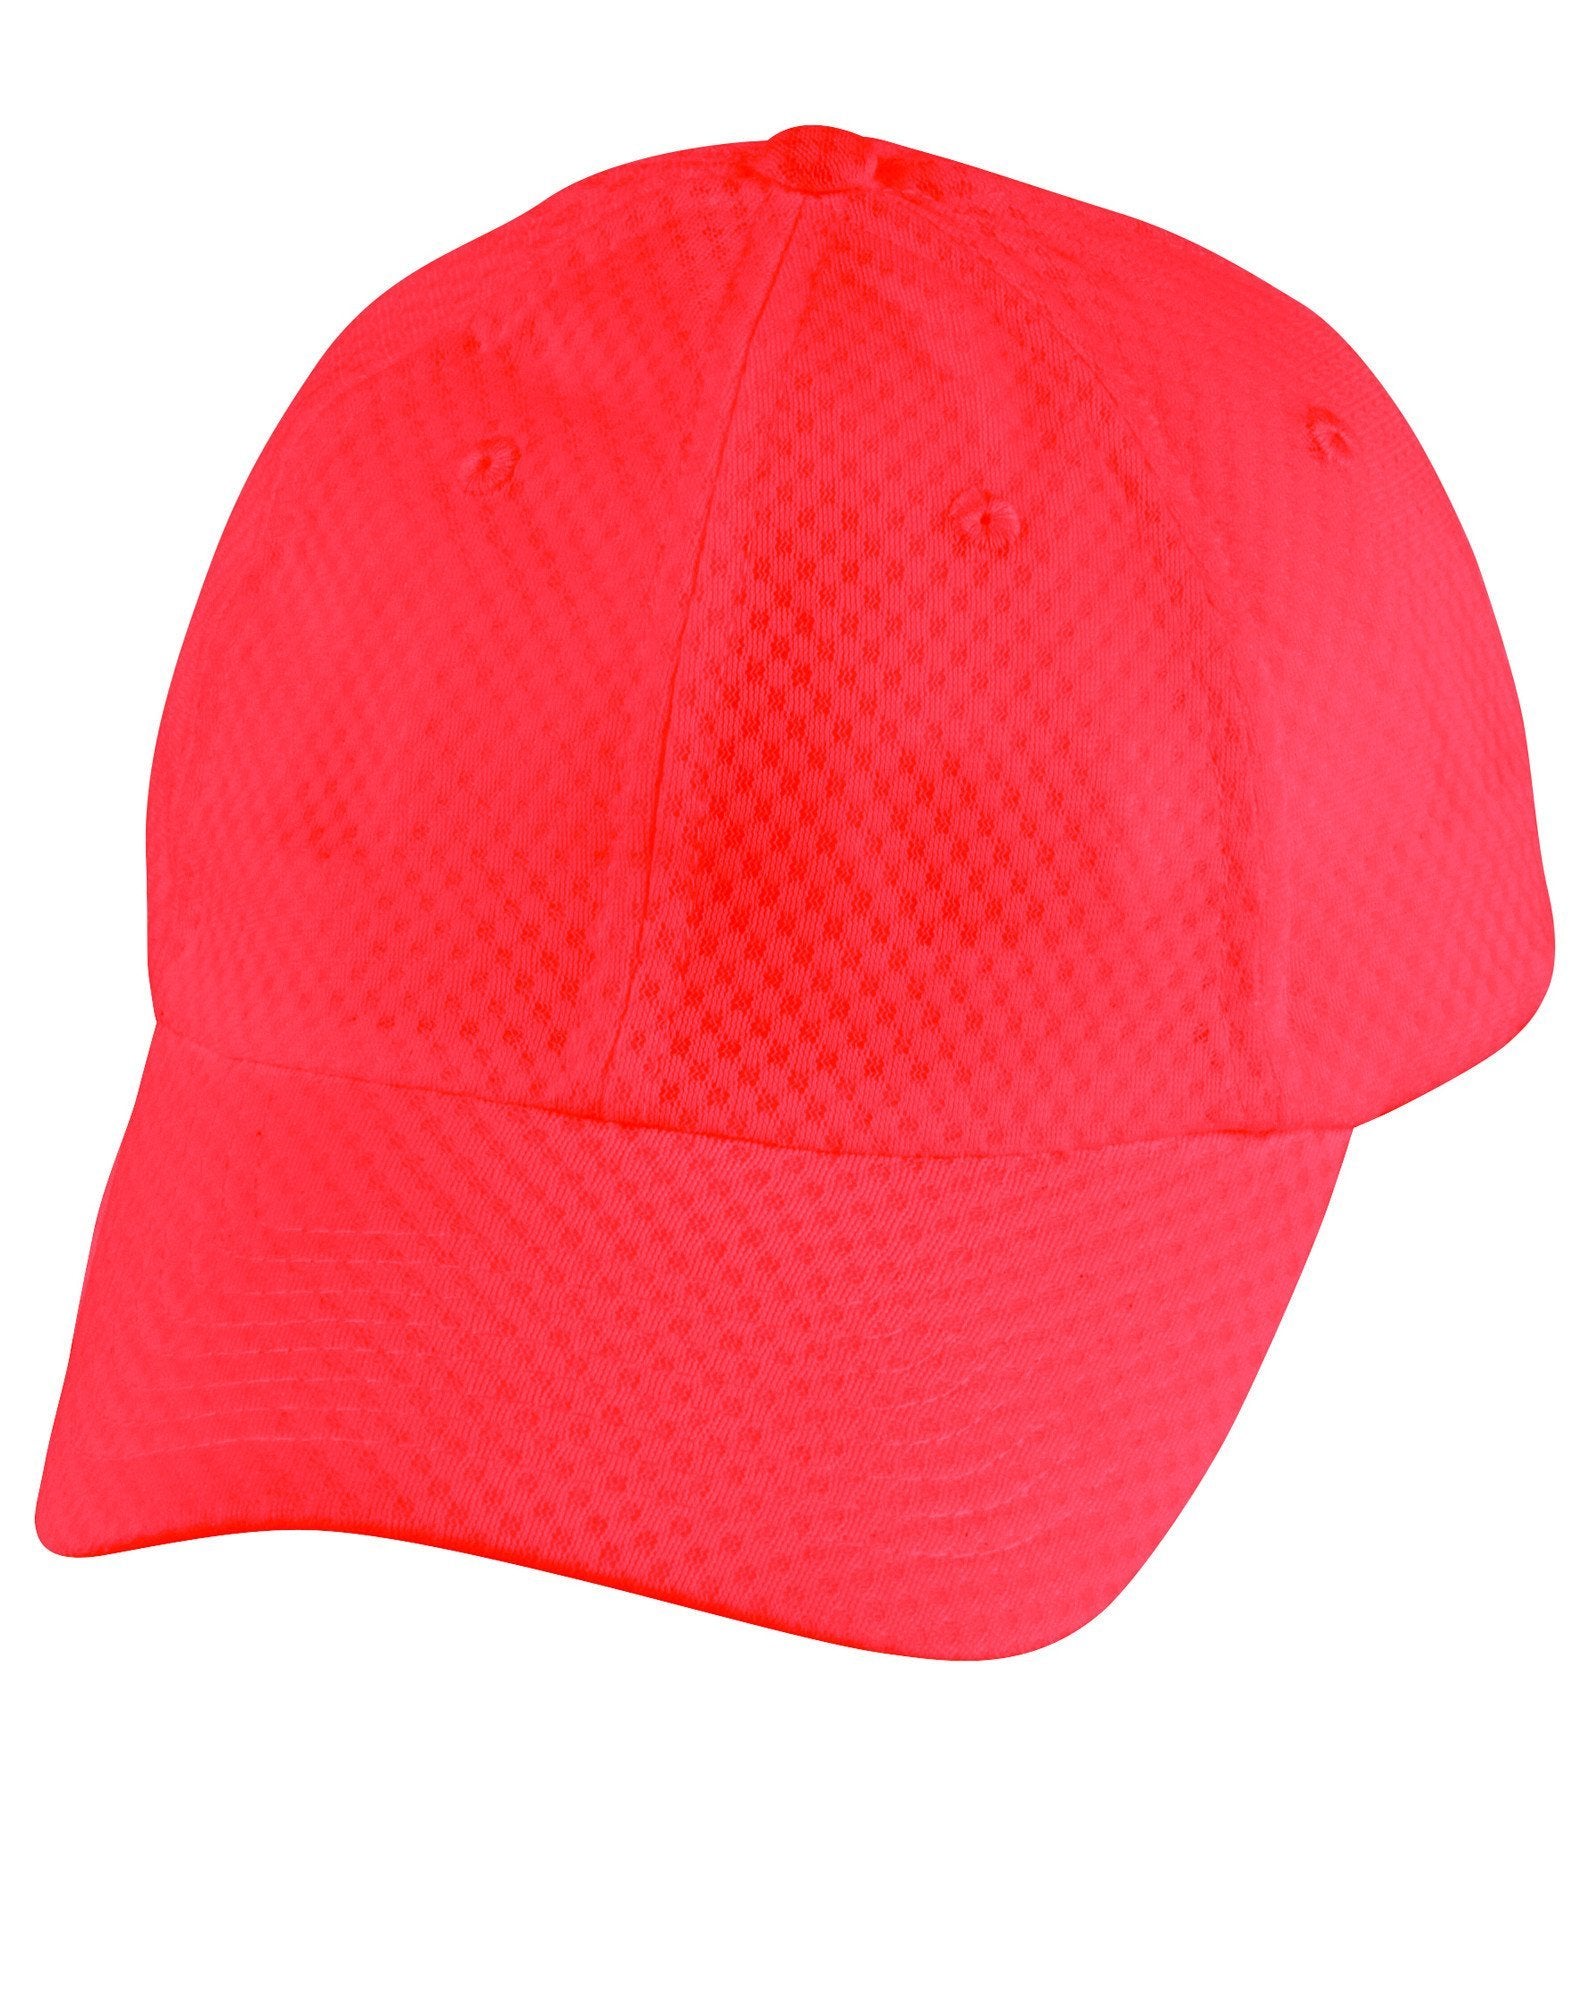 Winning Spirit-Winning Spirit Athletic Mesh Cap-Red-Uniform Wholesalers - 3